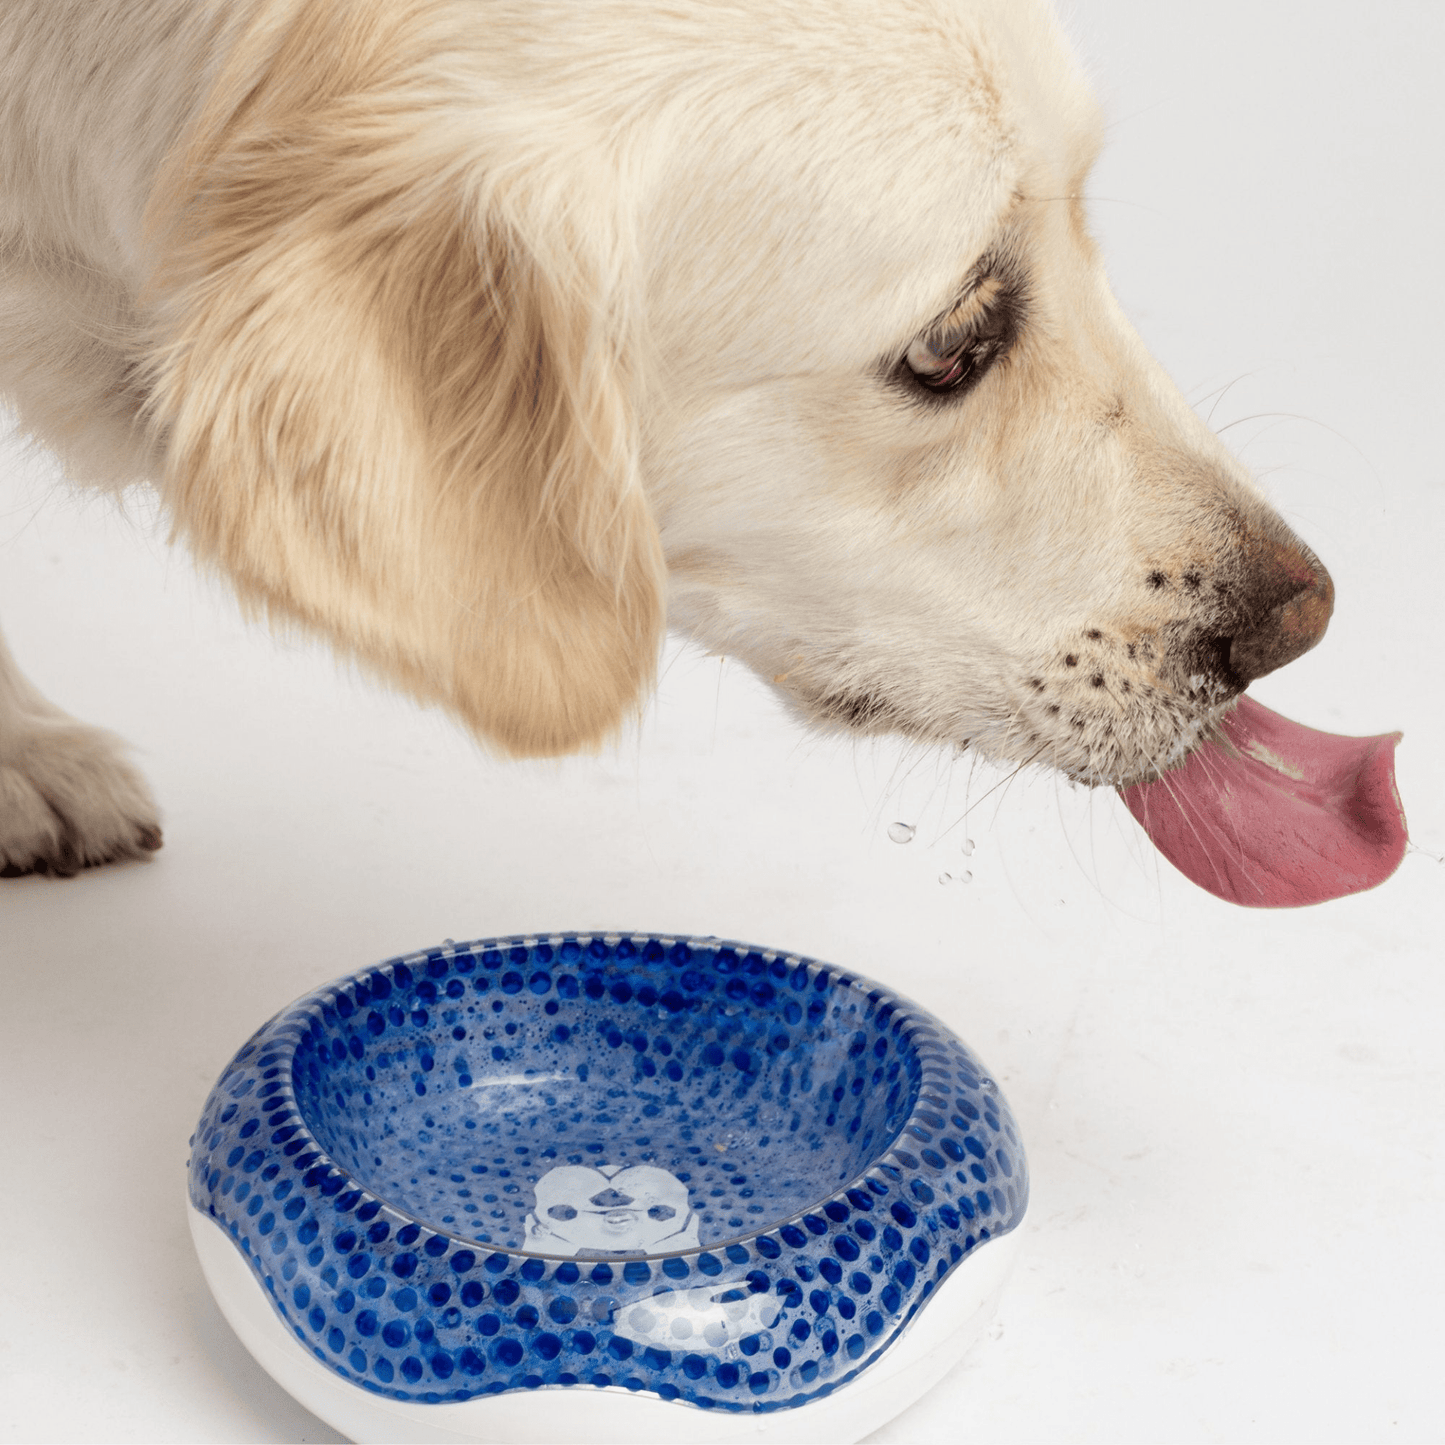 Dog and Pet Stuff Compact Cooling Dog Bowl